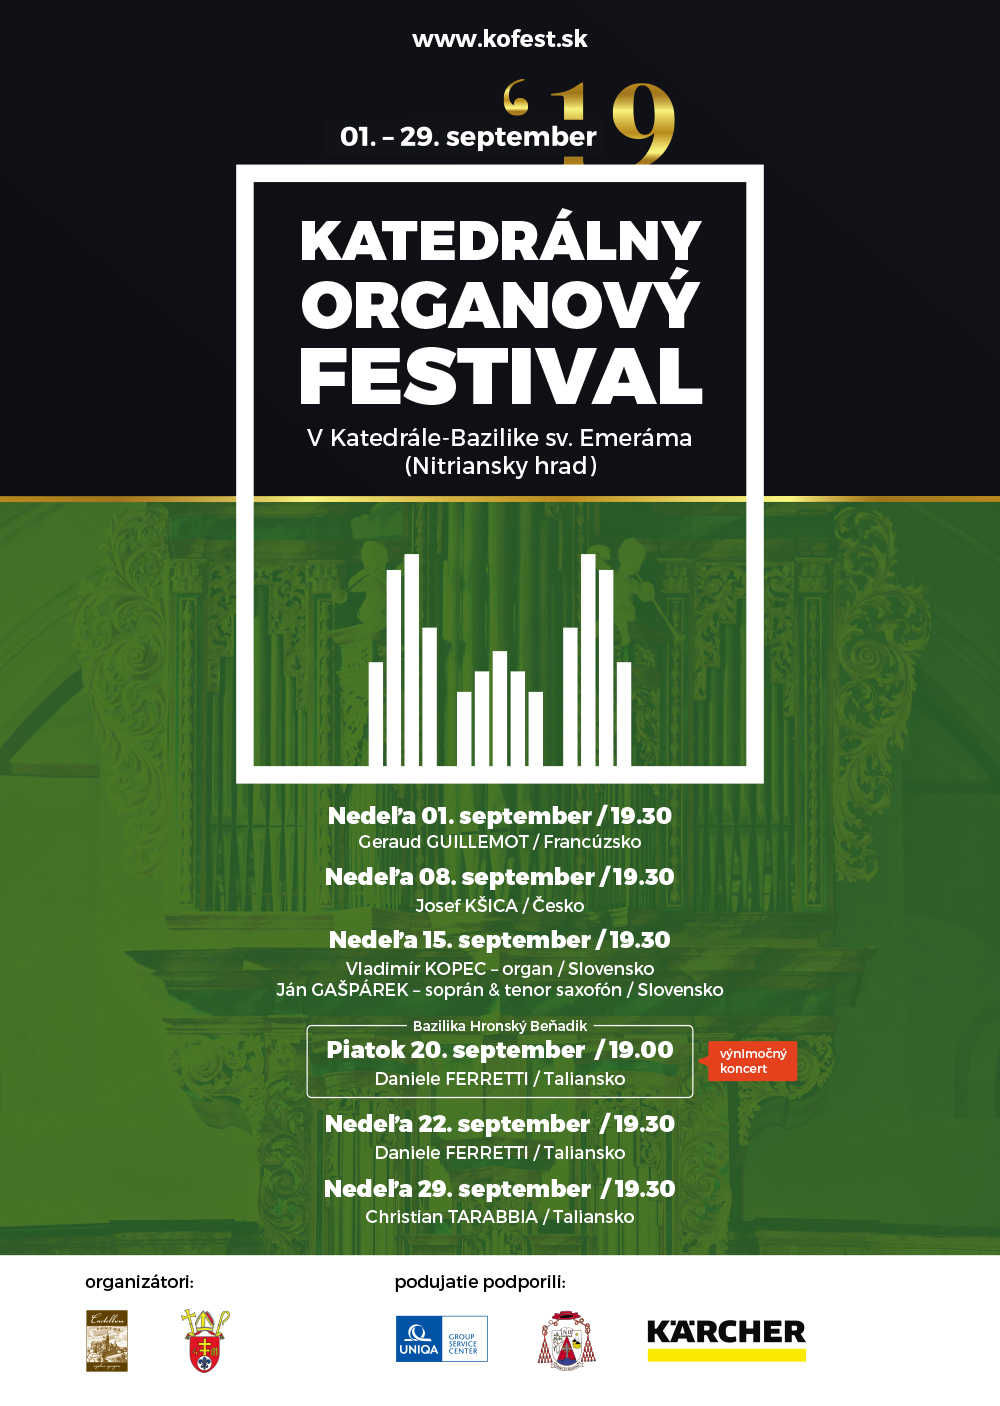 Katedrálny organový festival 2019